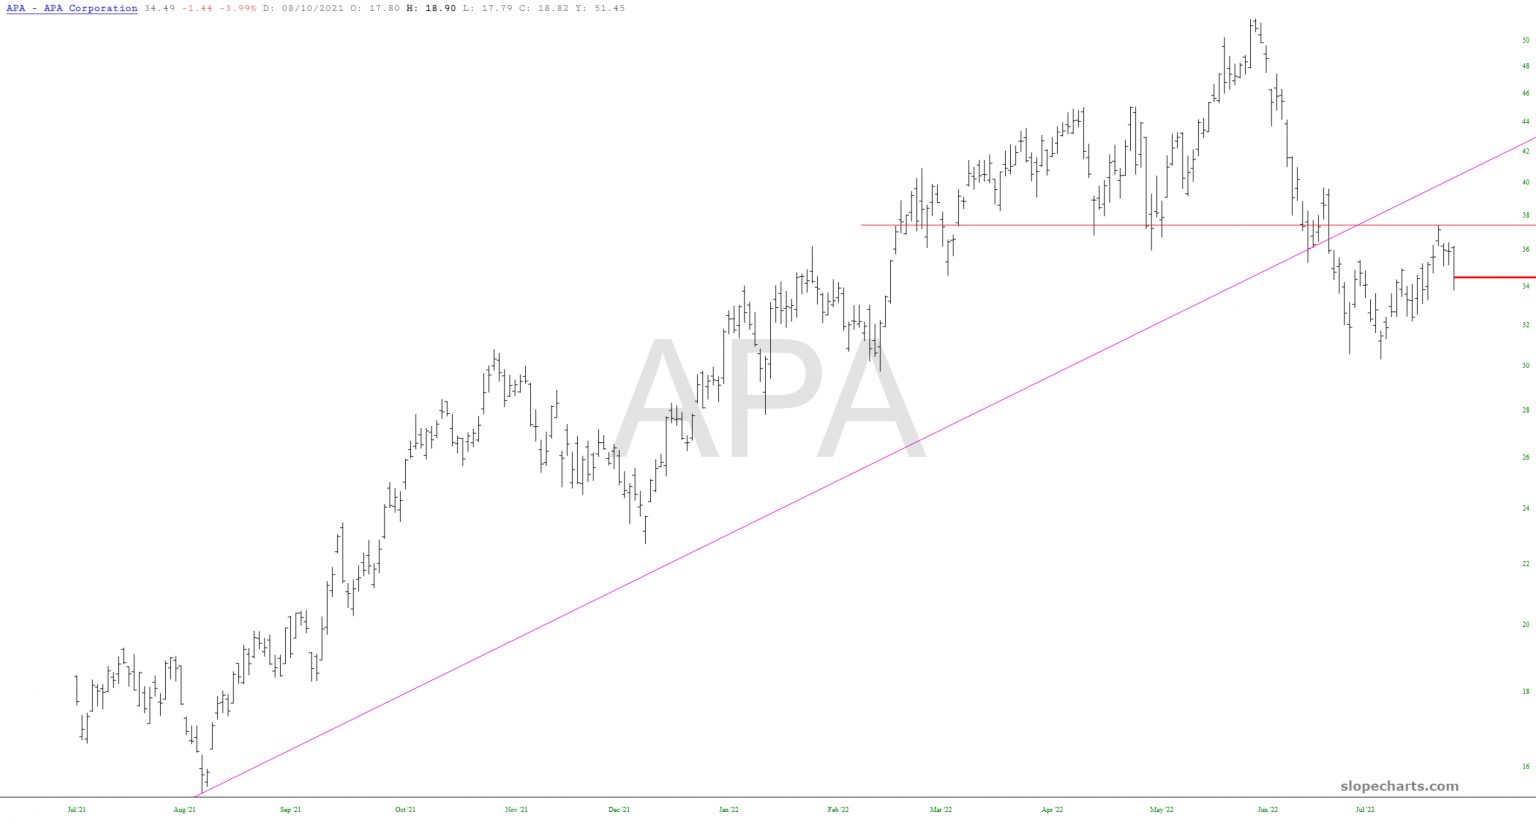 APA Corporation Daily Chart.